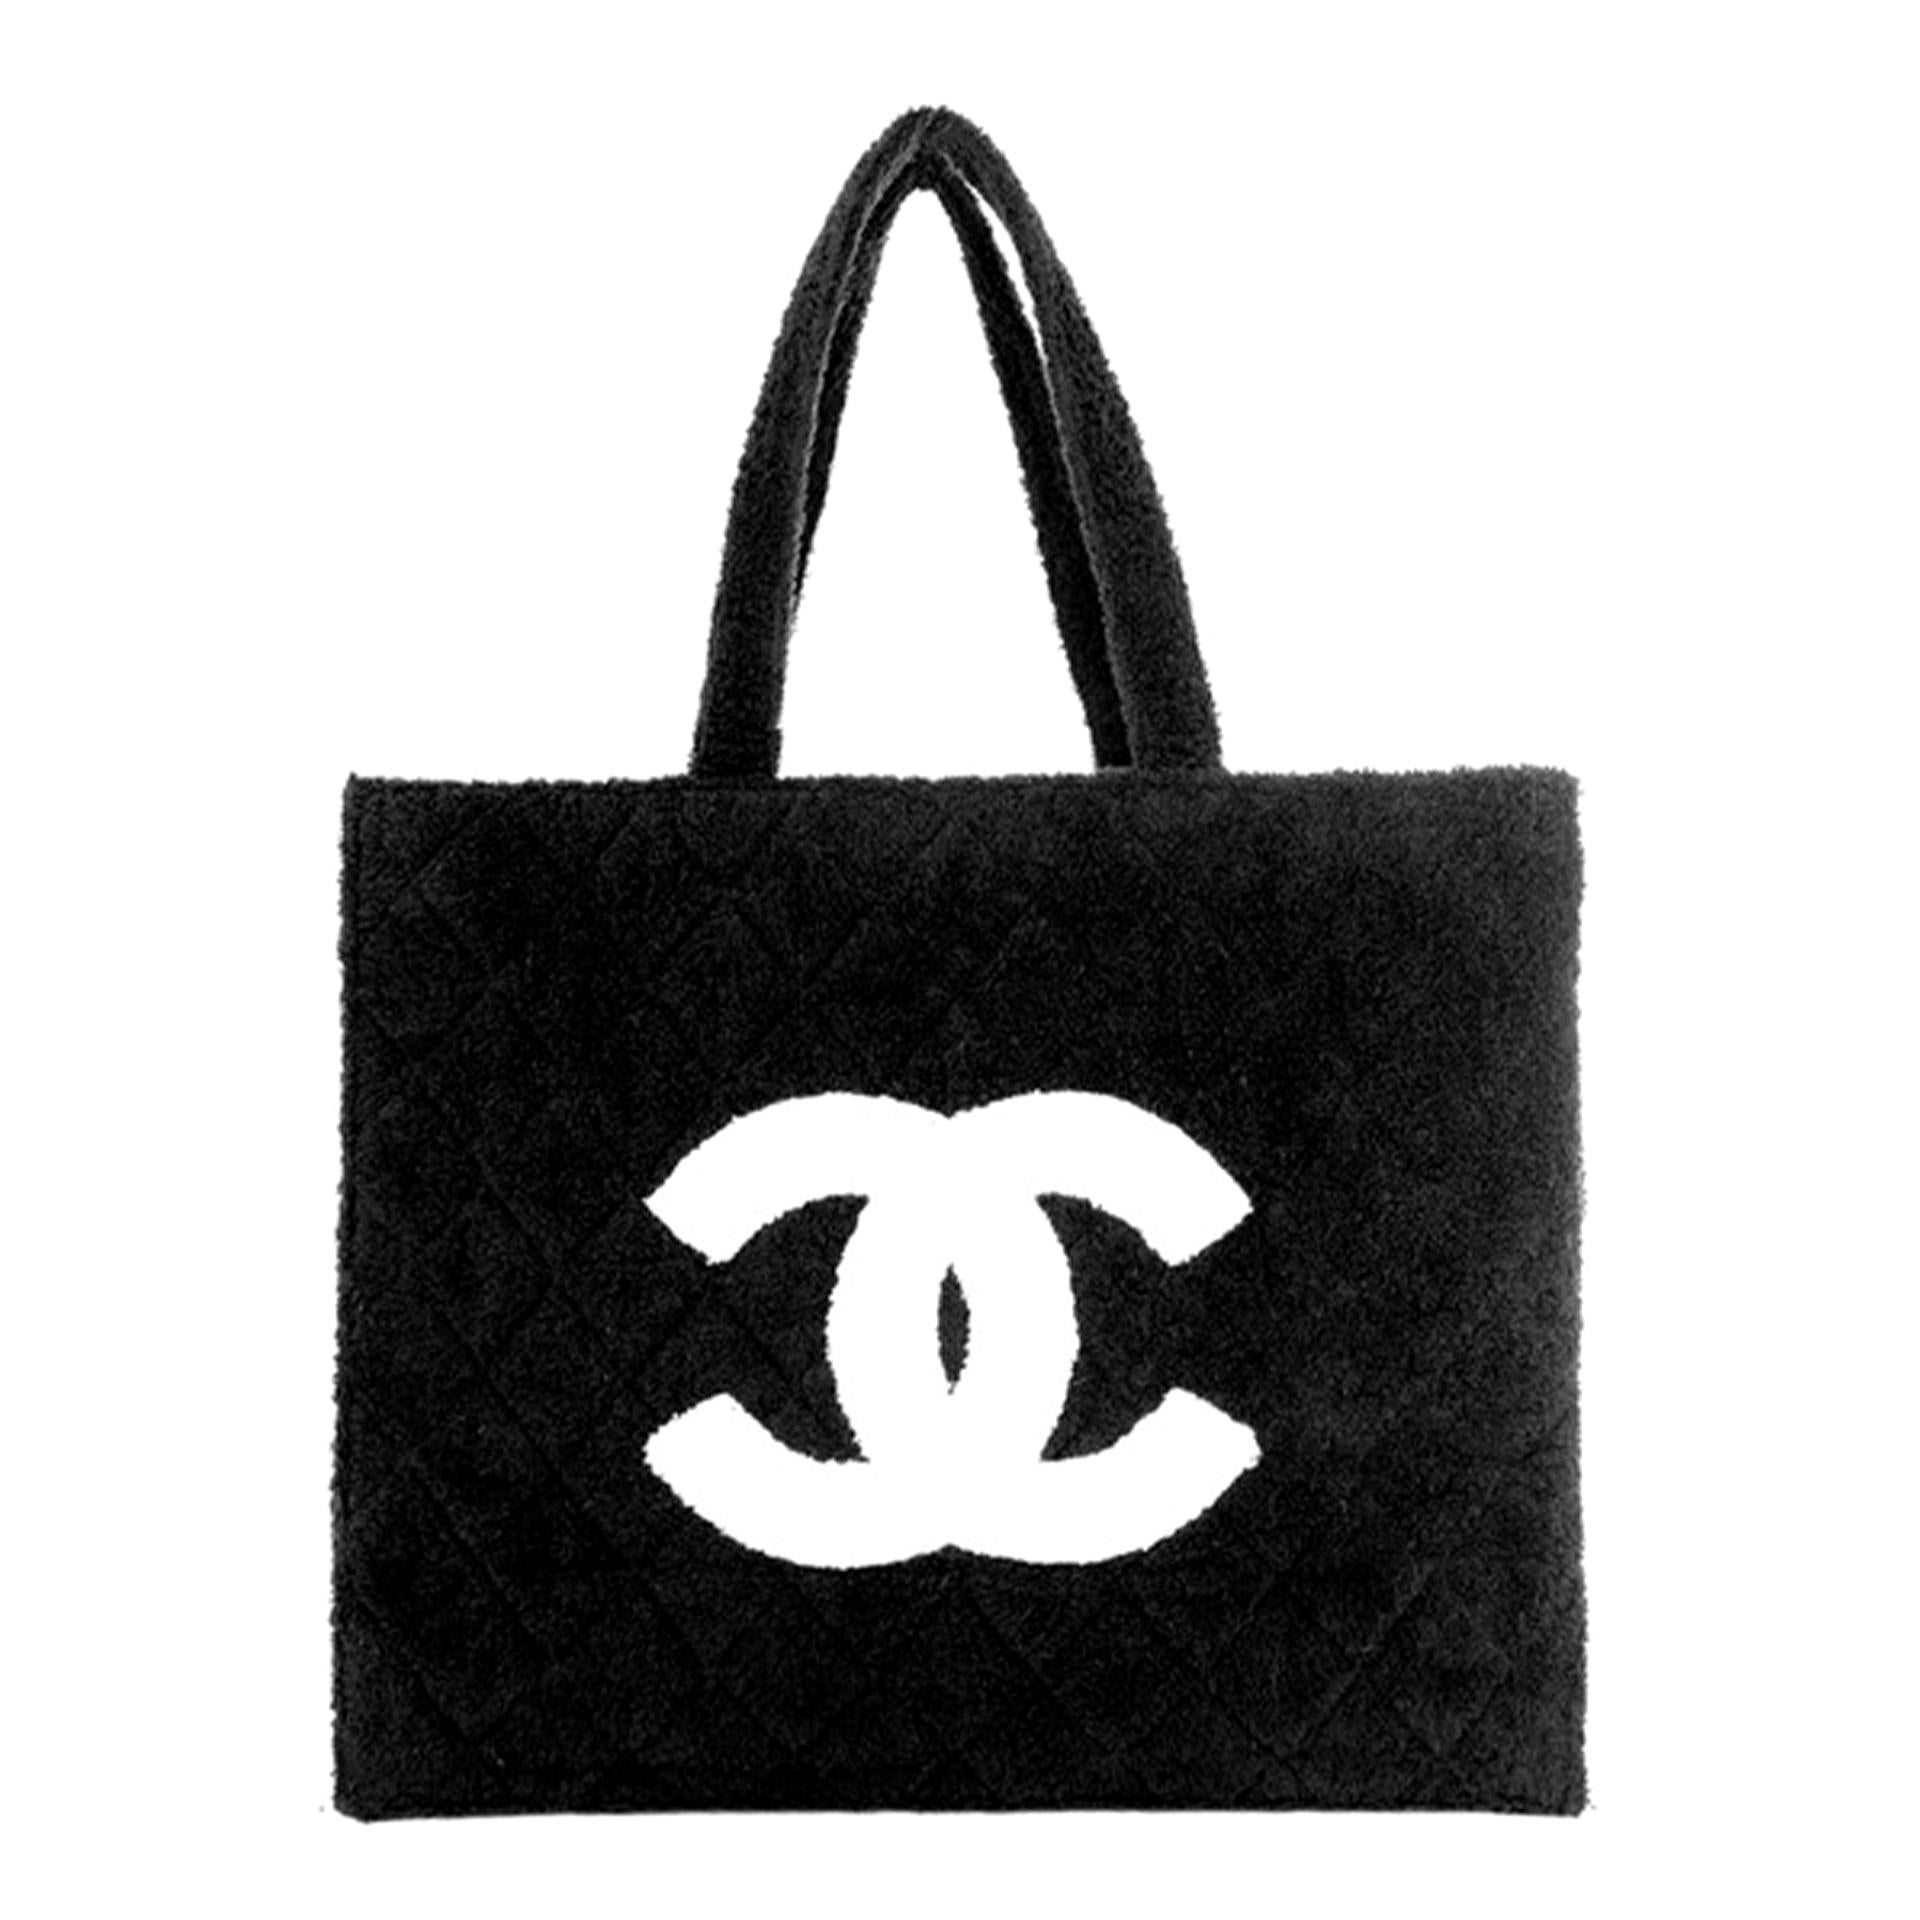 Chanel - Sac de plage vintage intemporel en tissu éponge noir, pièce rare